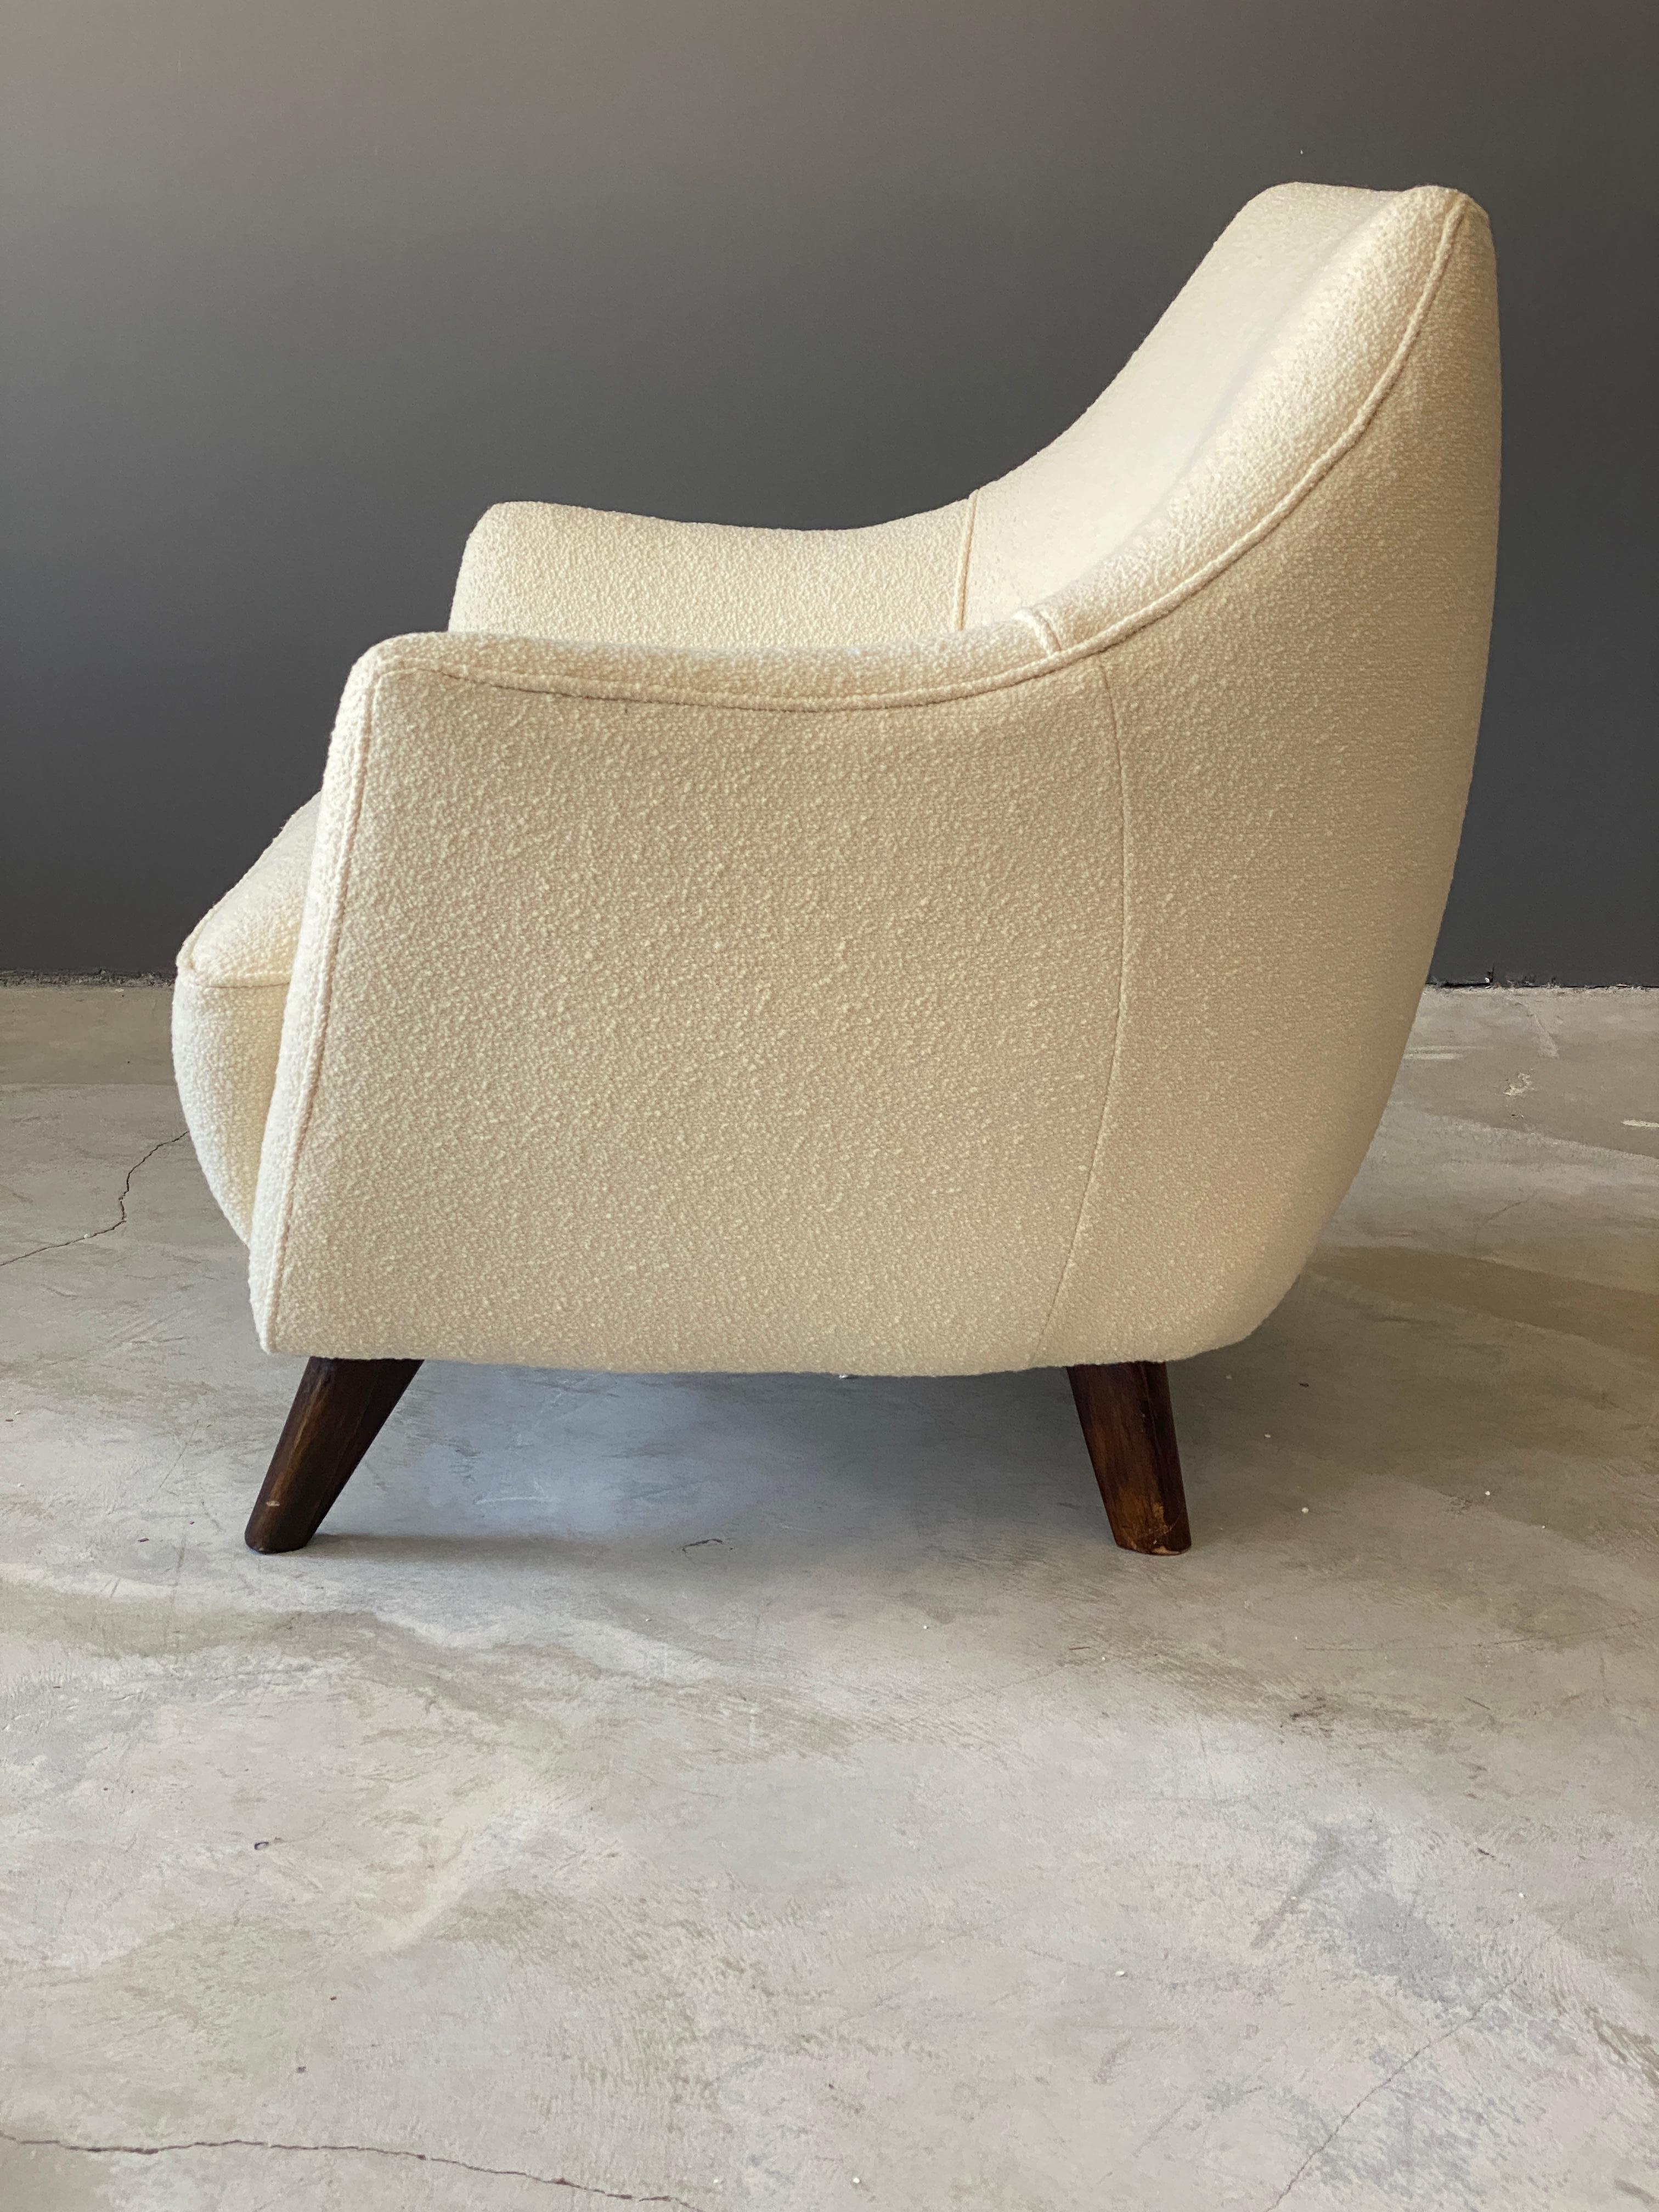 Italian Gio Ponti, Rare Lounge Chair, Augustus Ocean Liner, Beach, Fabric, Italy, 1950